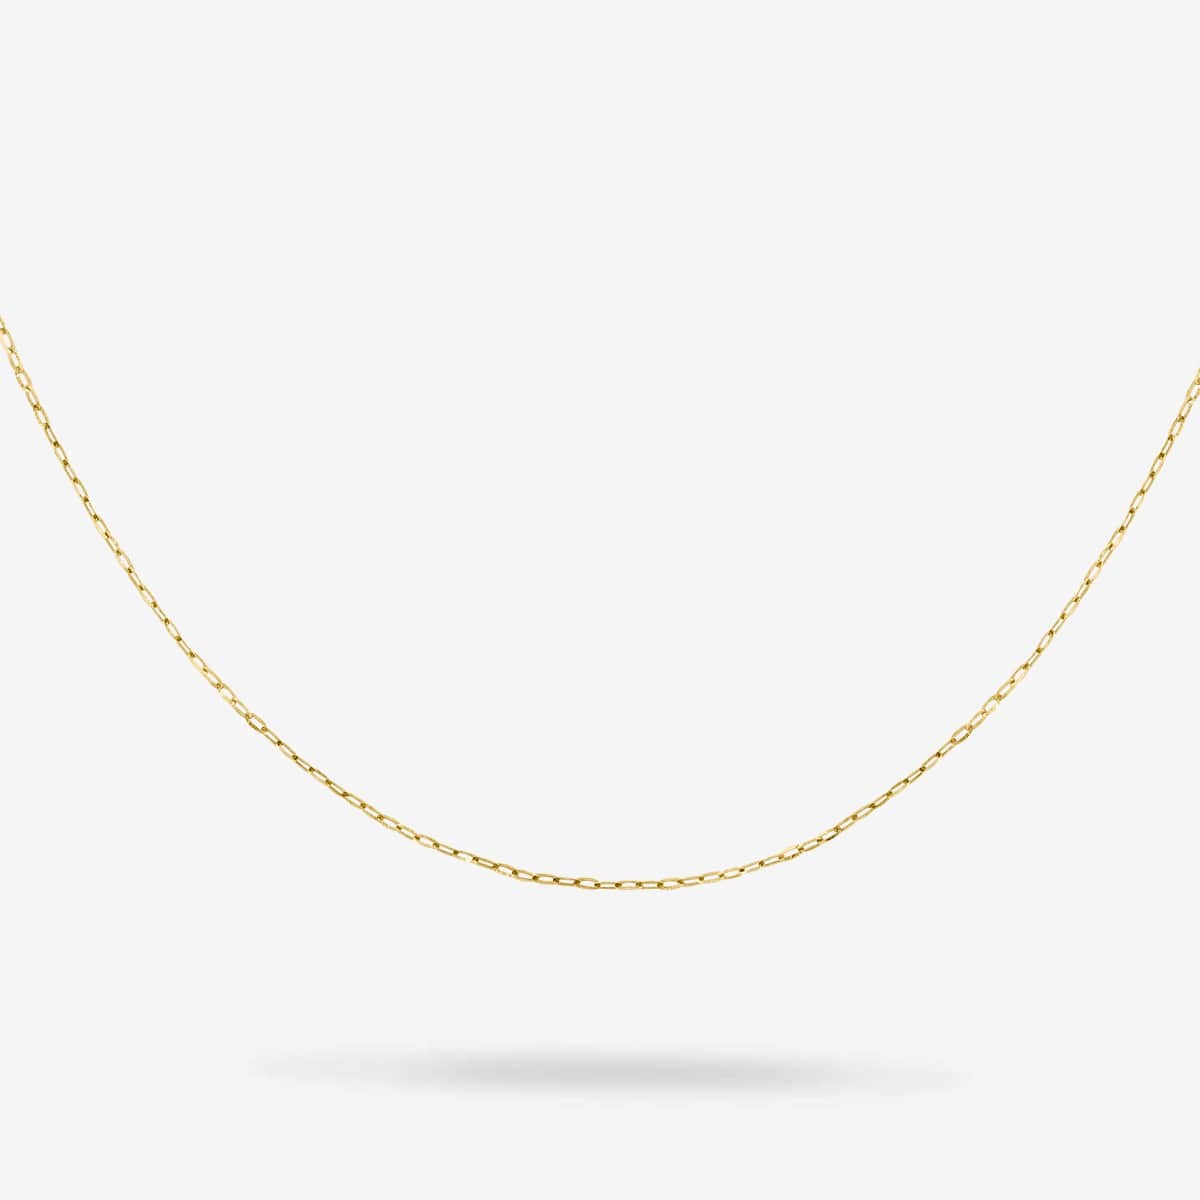 Sparkle Chain 45 cm - Halsketten - 14k vergoldet